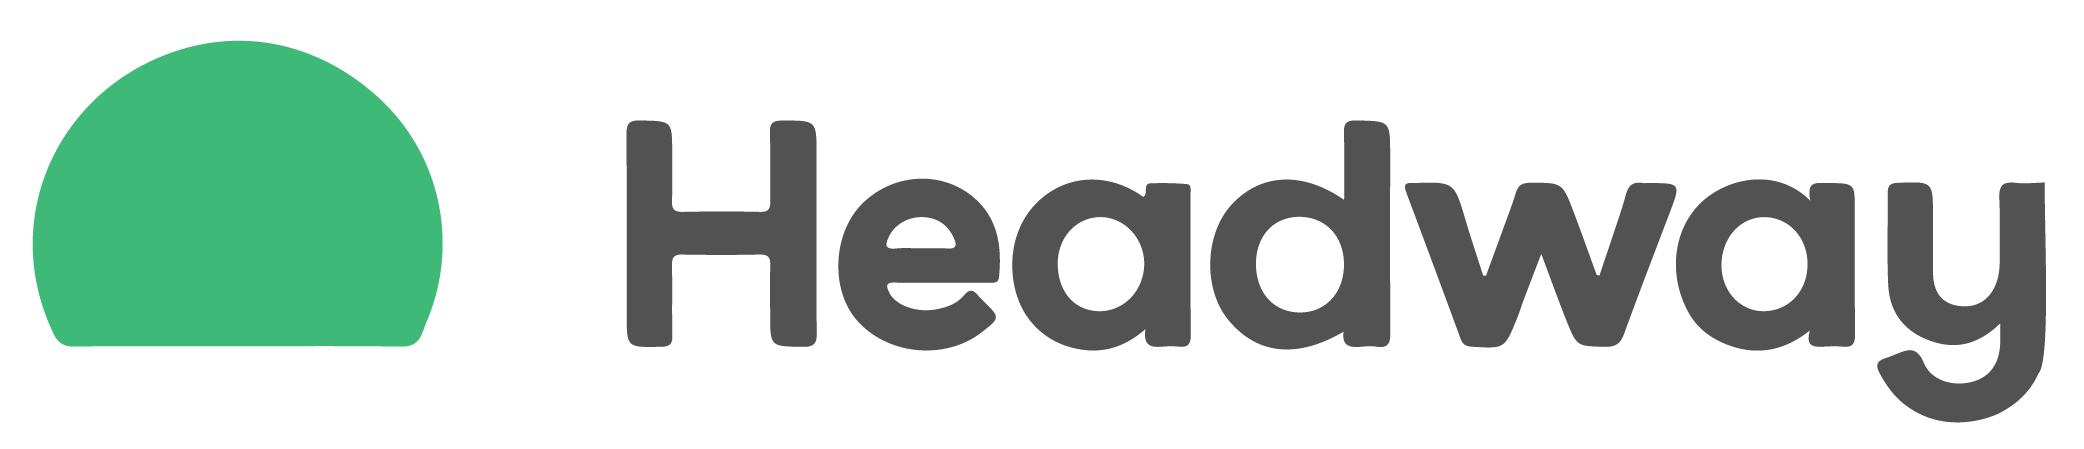 Headway logo-01